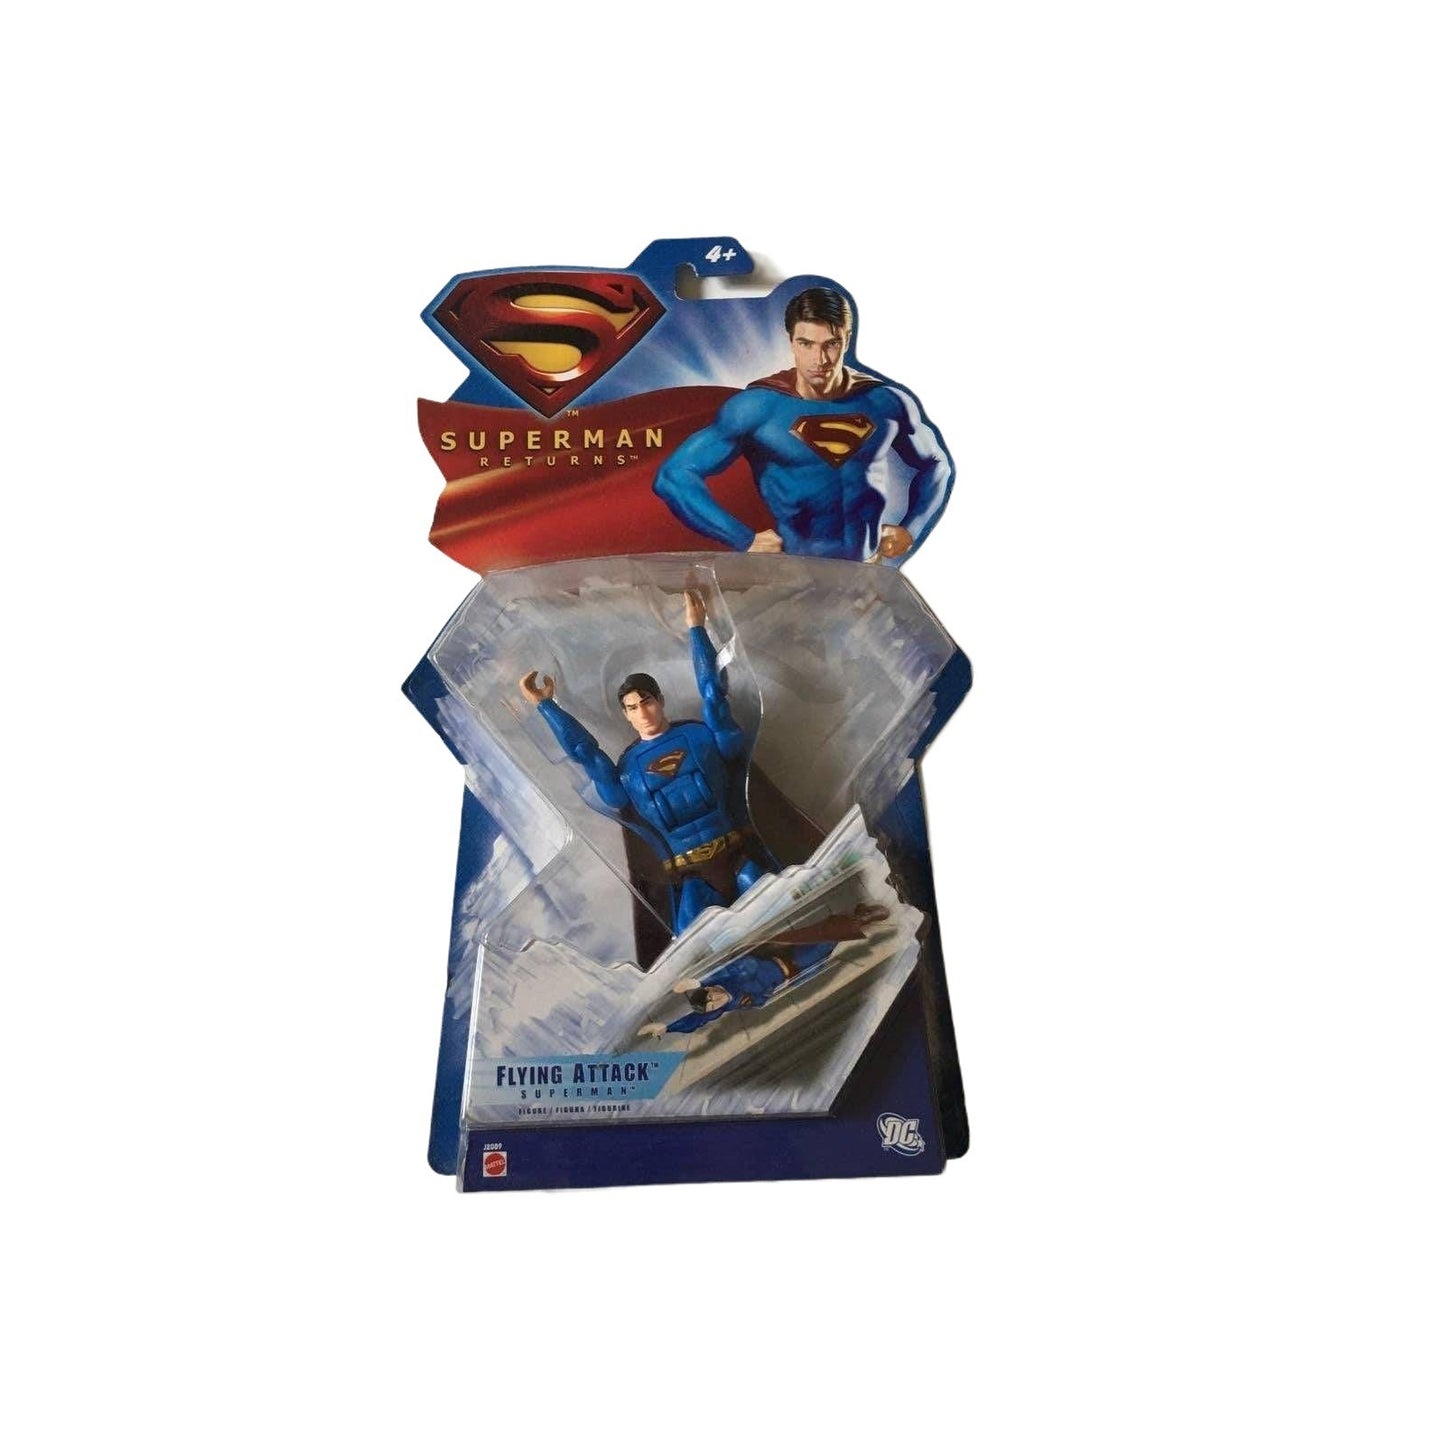 Superman Returns Flying Attack Figure New